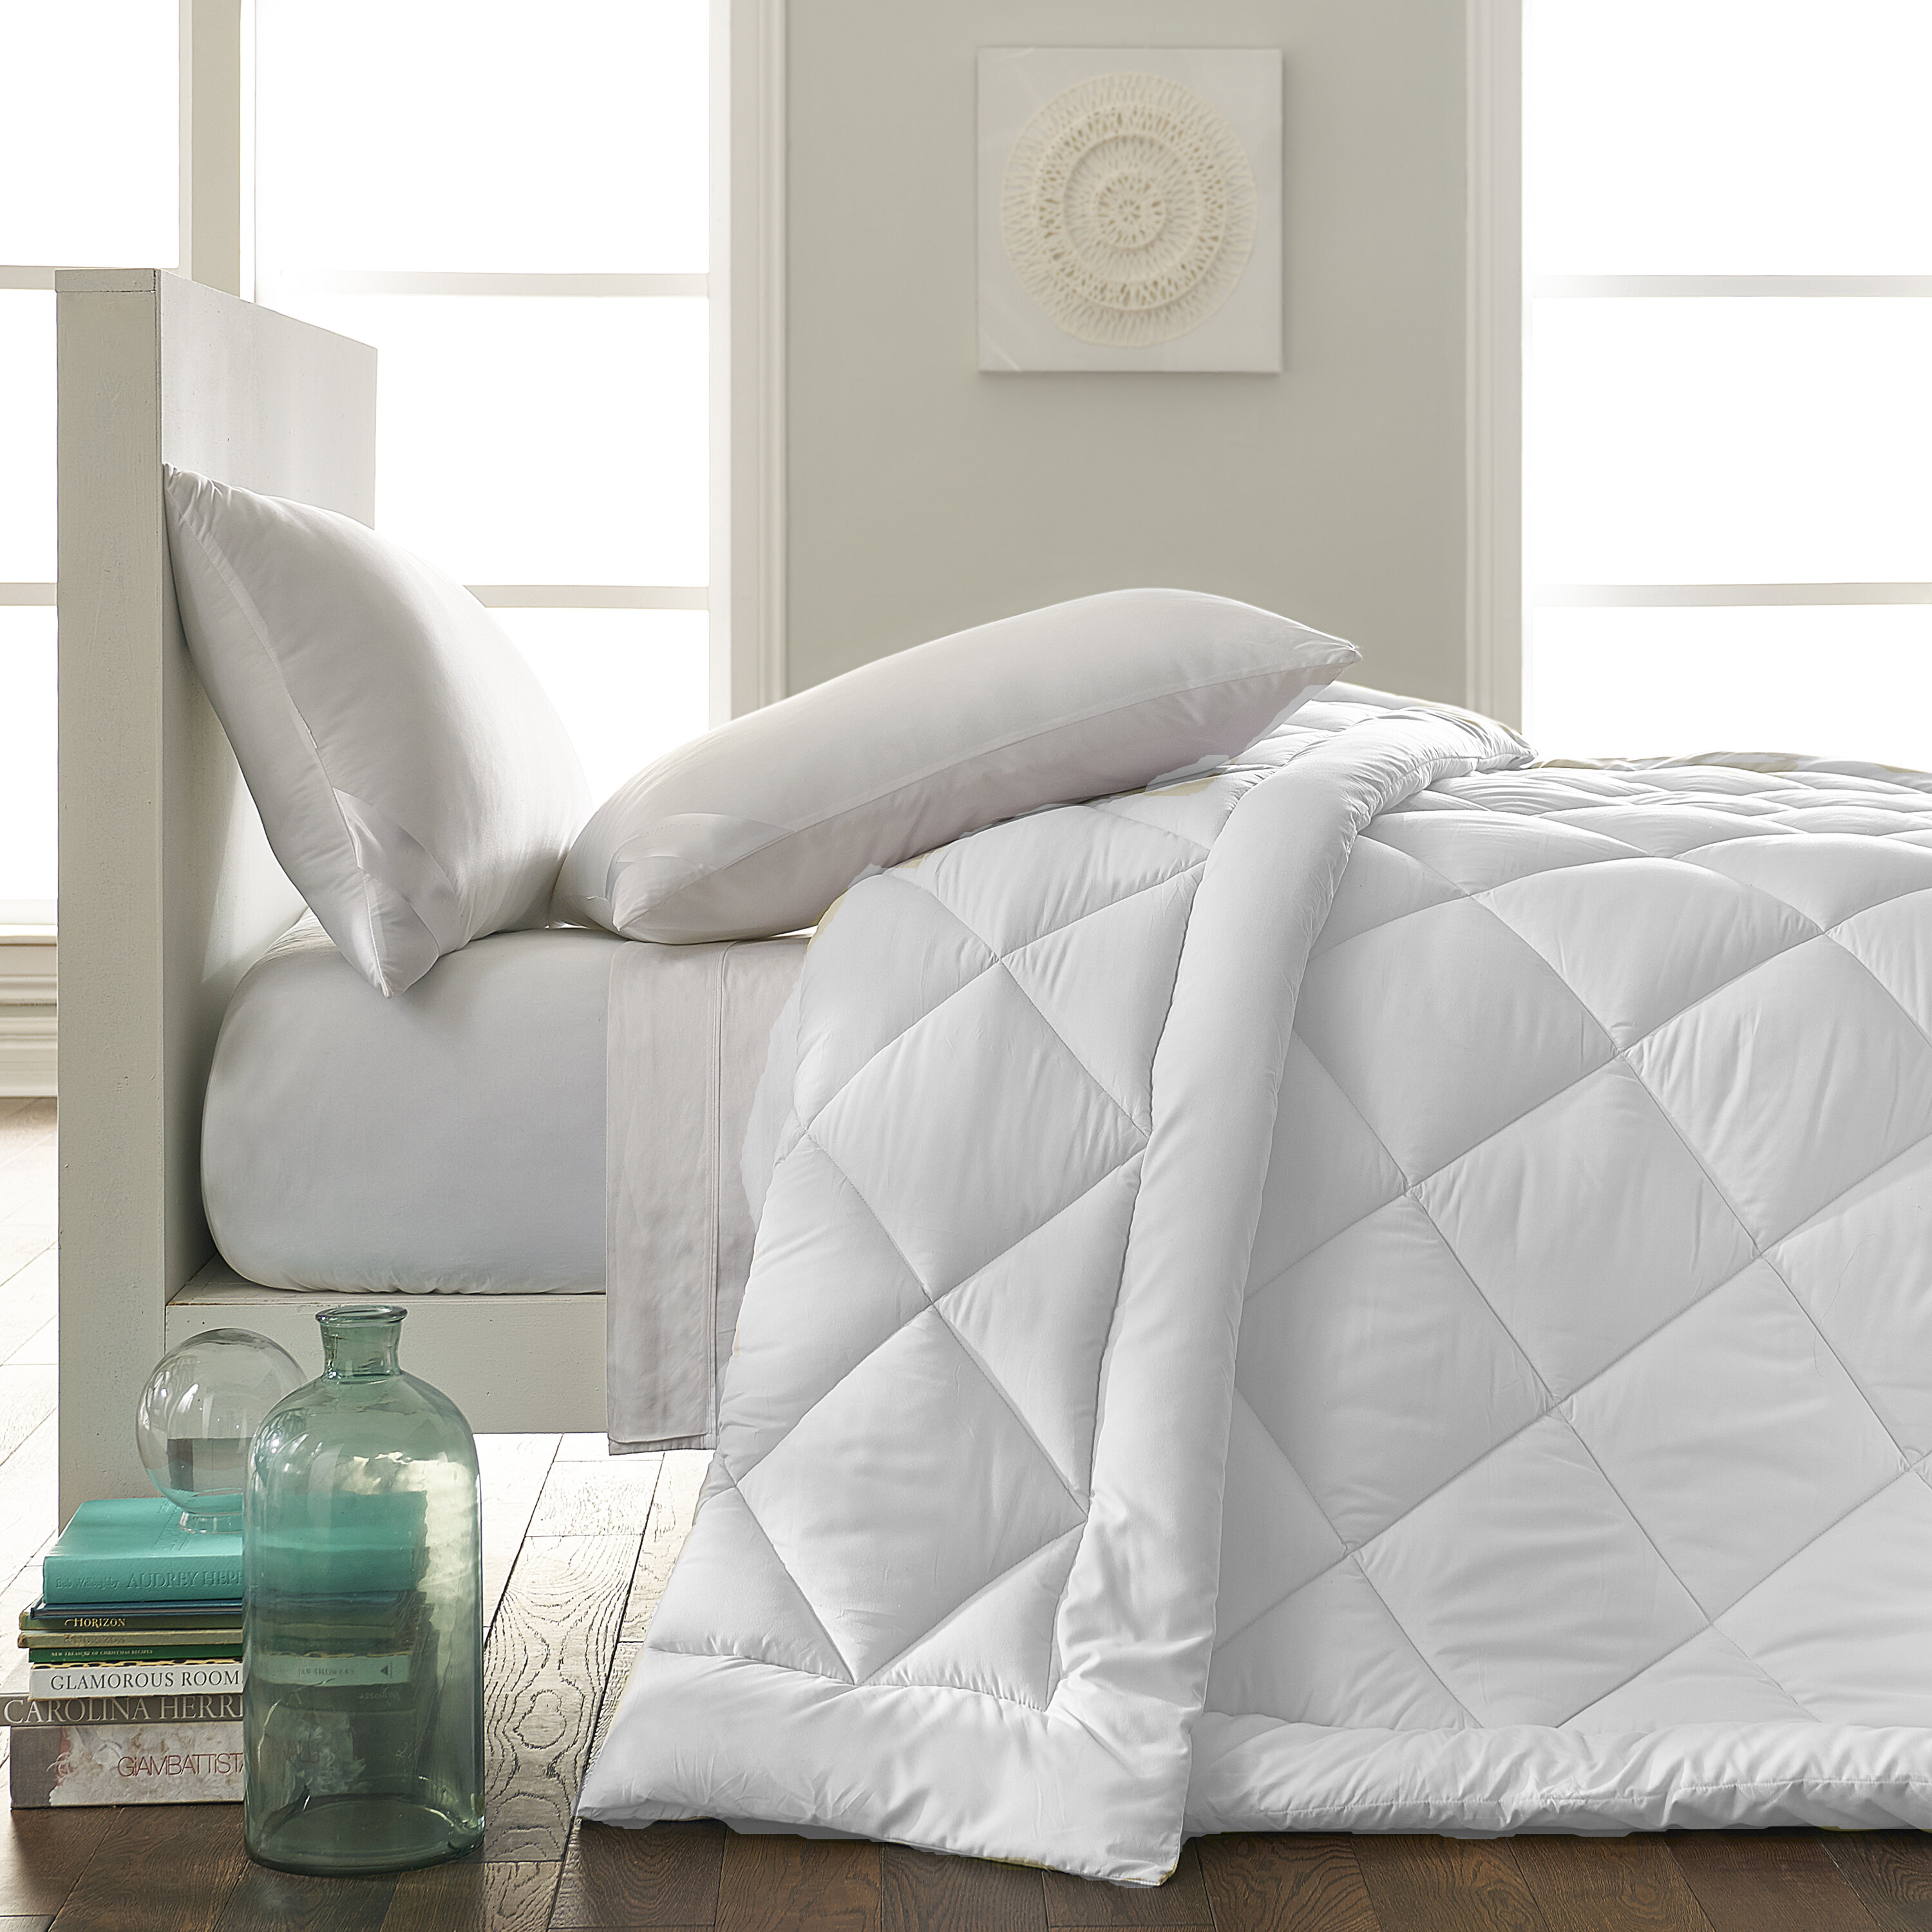 Alwyn Home Medium Warmth All Season Polyester Down Alternative Comforter Reviews Wayfair